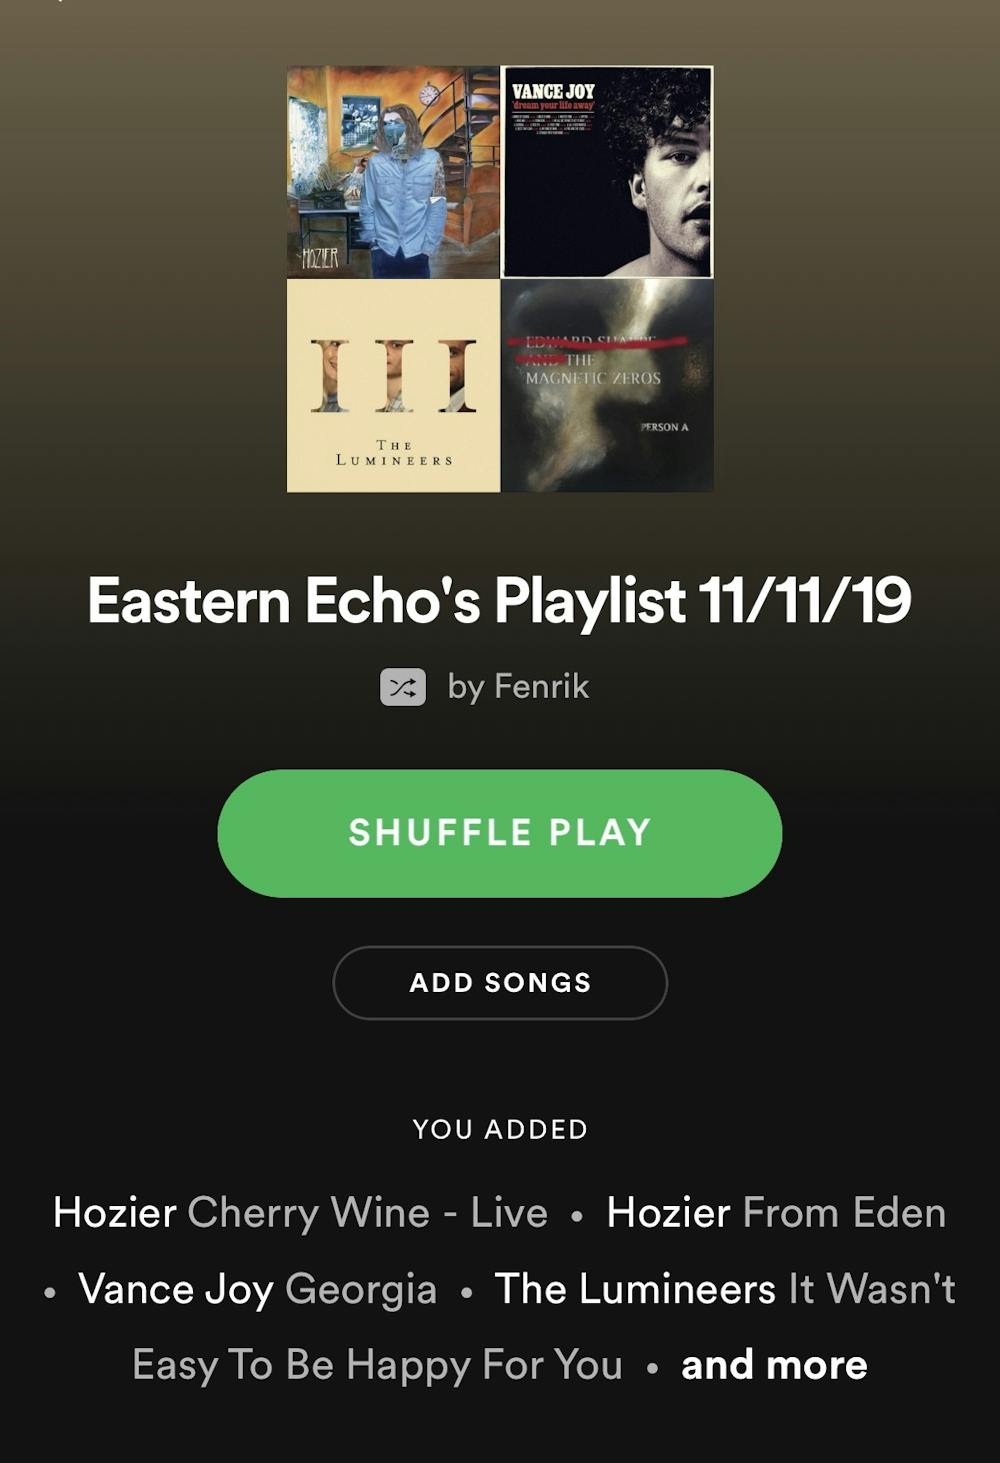 The Eastern Echo’s weekly playlist